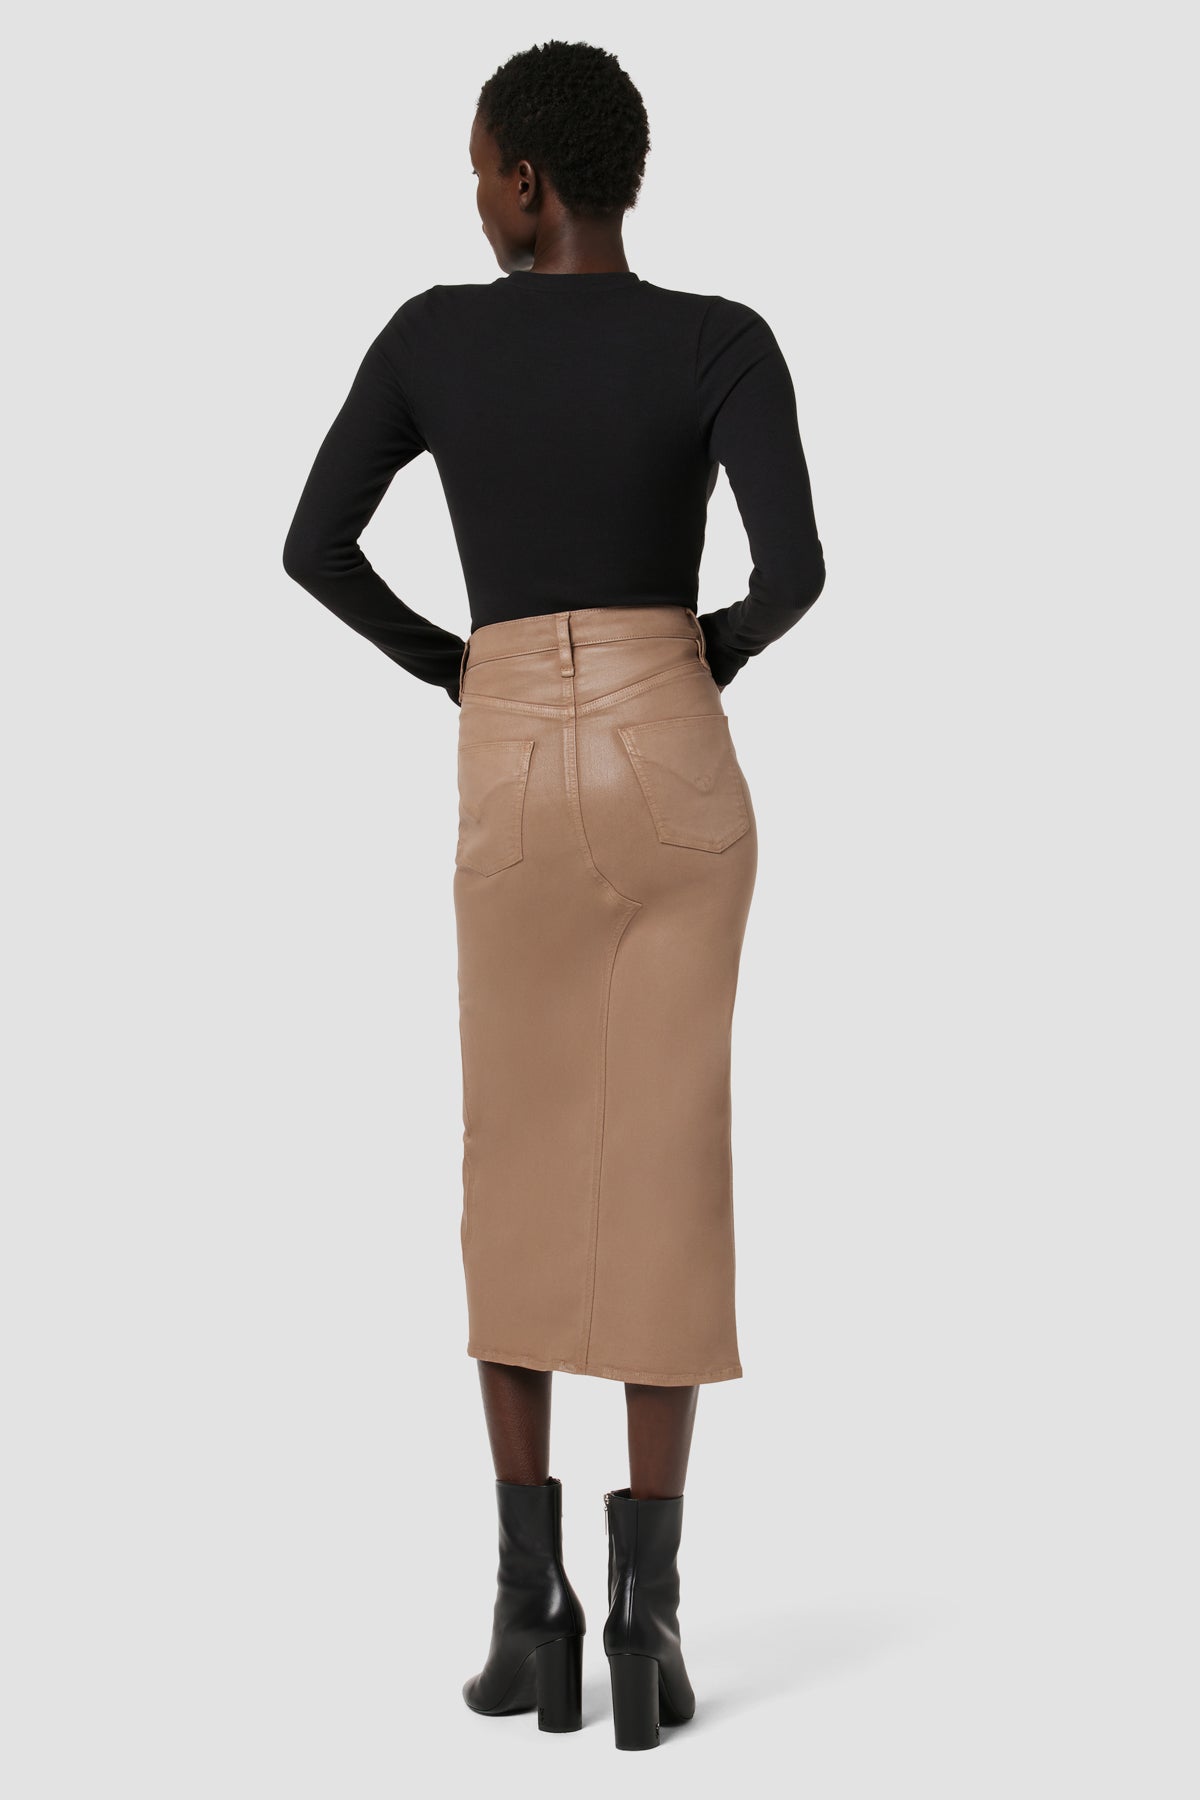 Reconstructed Skirt